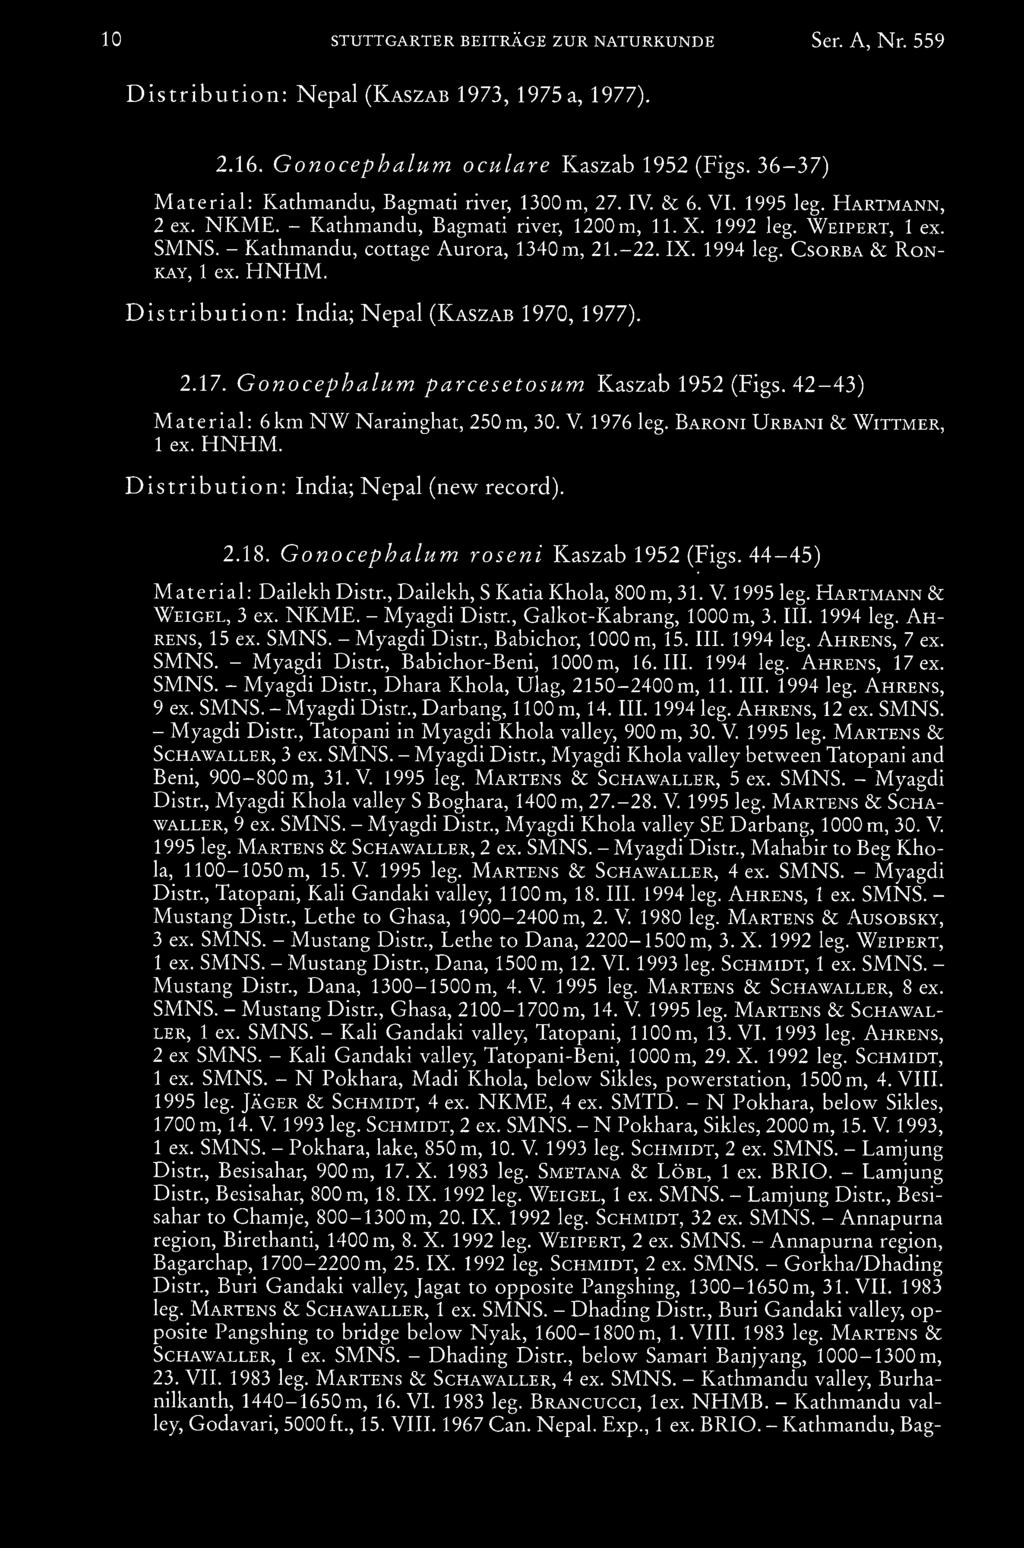 16. Gonocephalum oculare Kaszab 1952 (Figs. 36-37) Material: Kathmandu, Bagmati river, 1300m, 27. IV. & 6. VI. 1995 leg. Hartmann, 2 ex. NKME. - Kathmandu, Bagmati river, 1200 m, 11. X. 1992 leg.